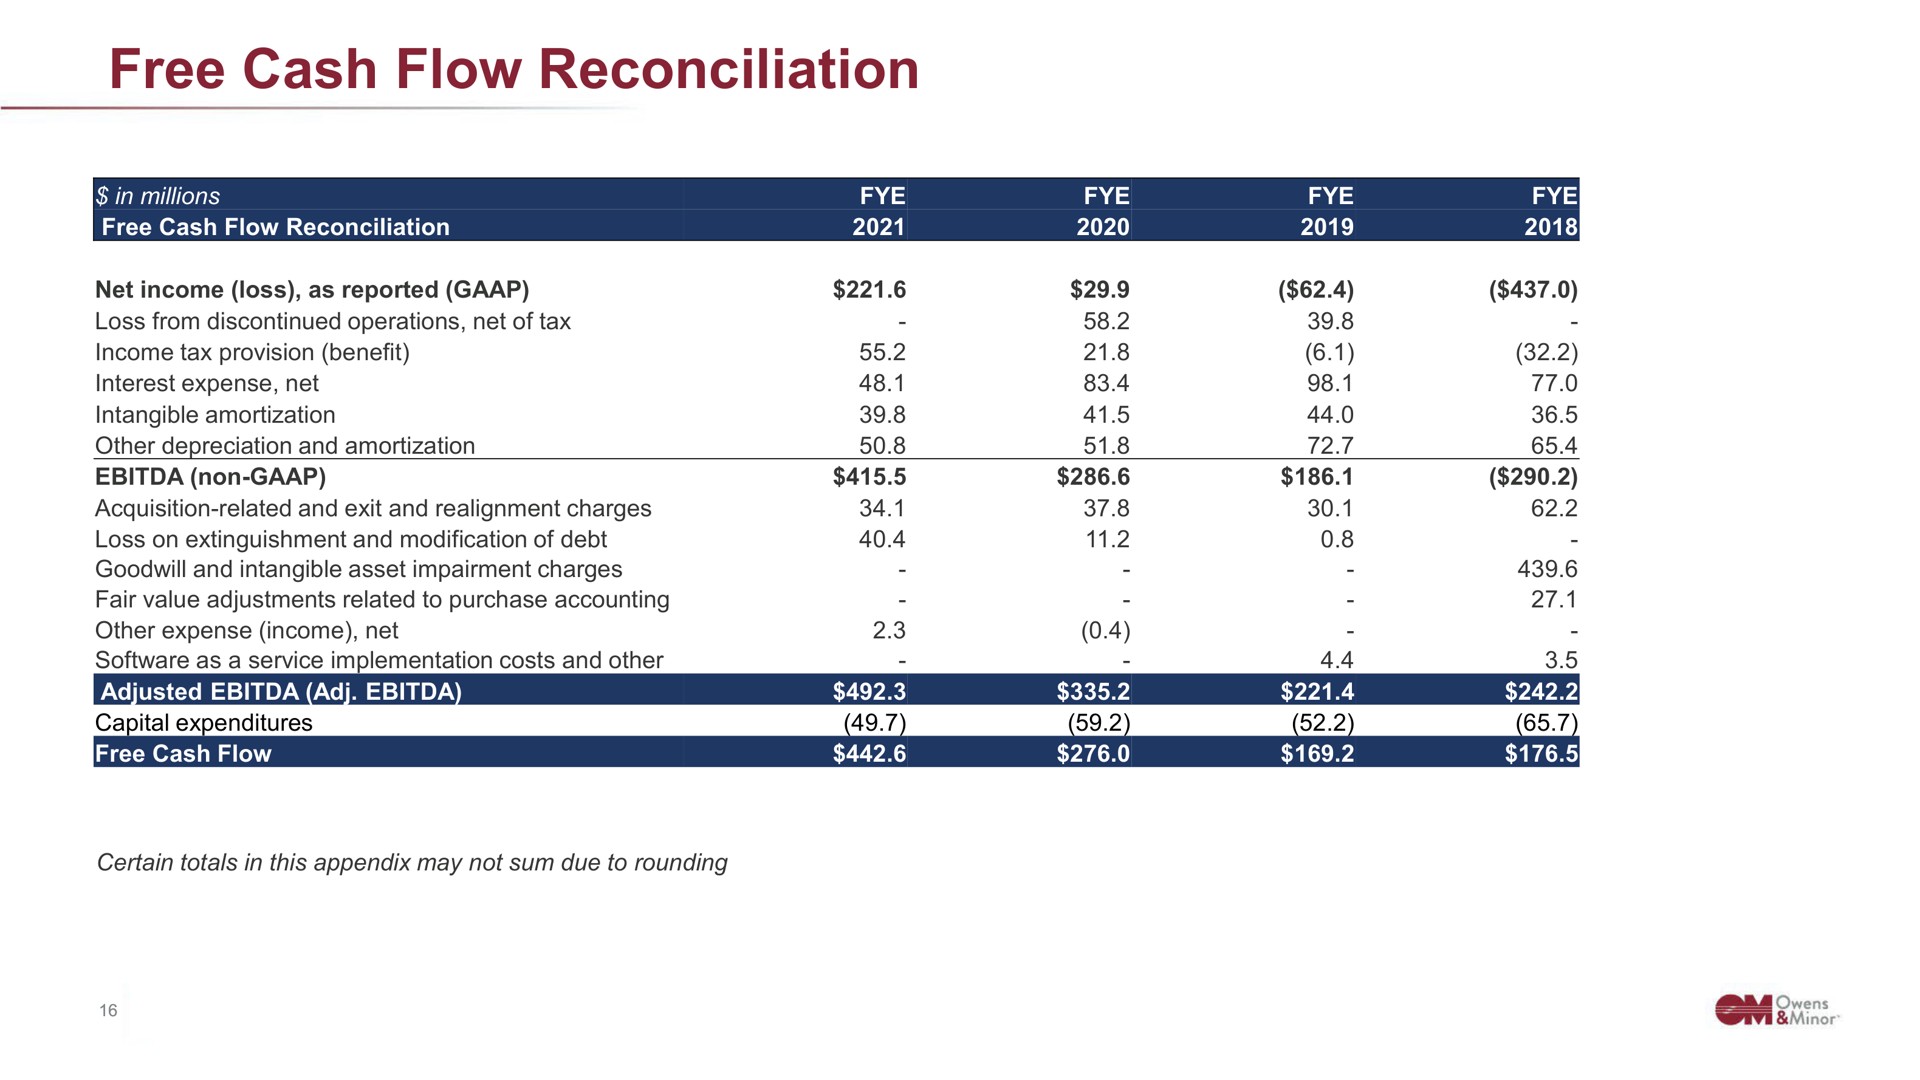 free cash flow reconciliation | Owens&Minor